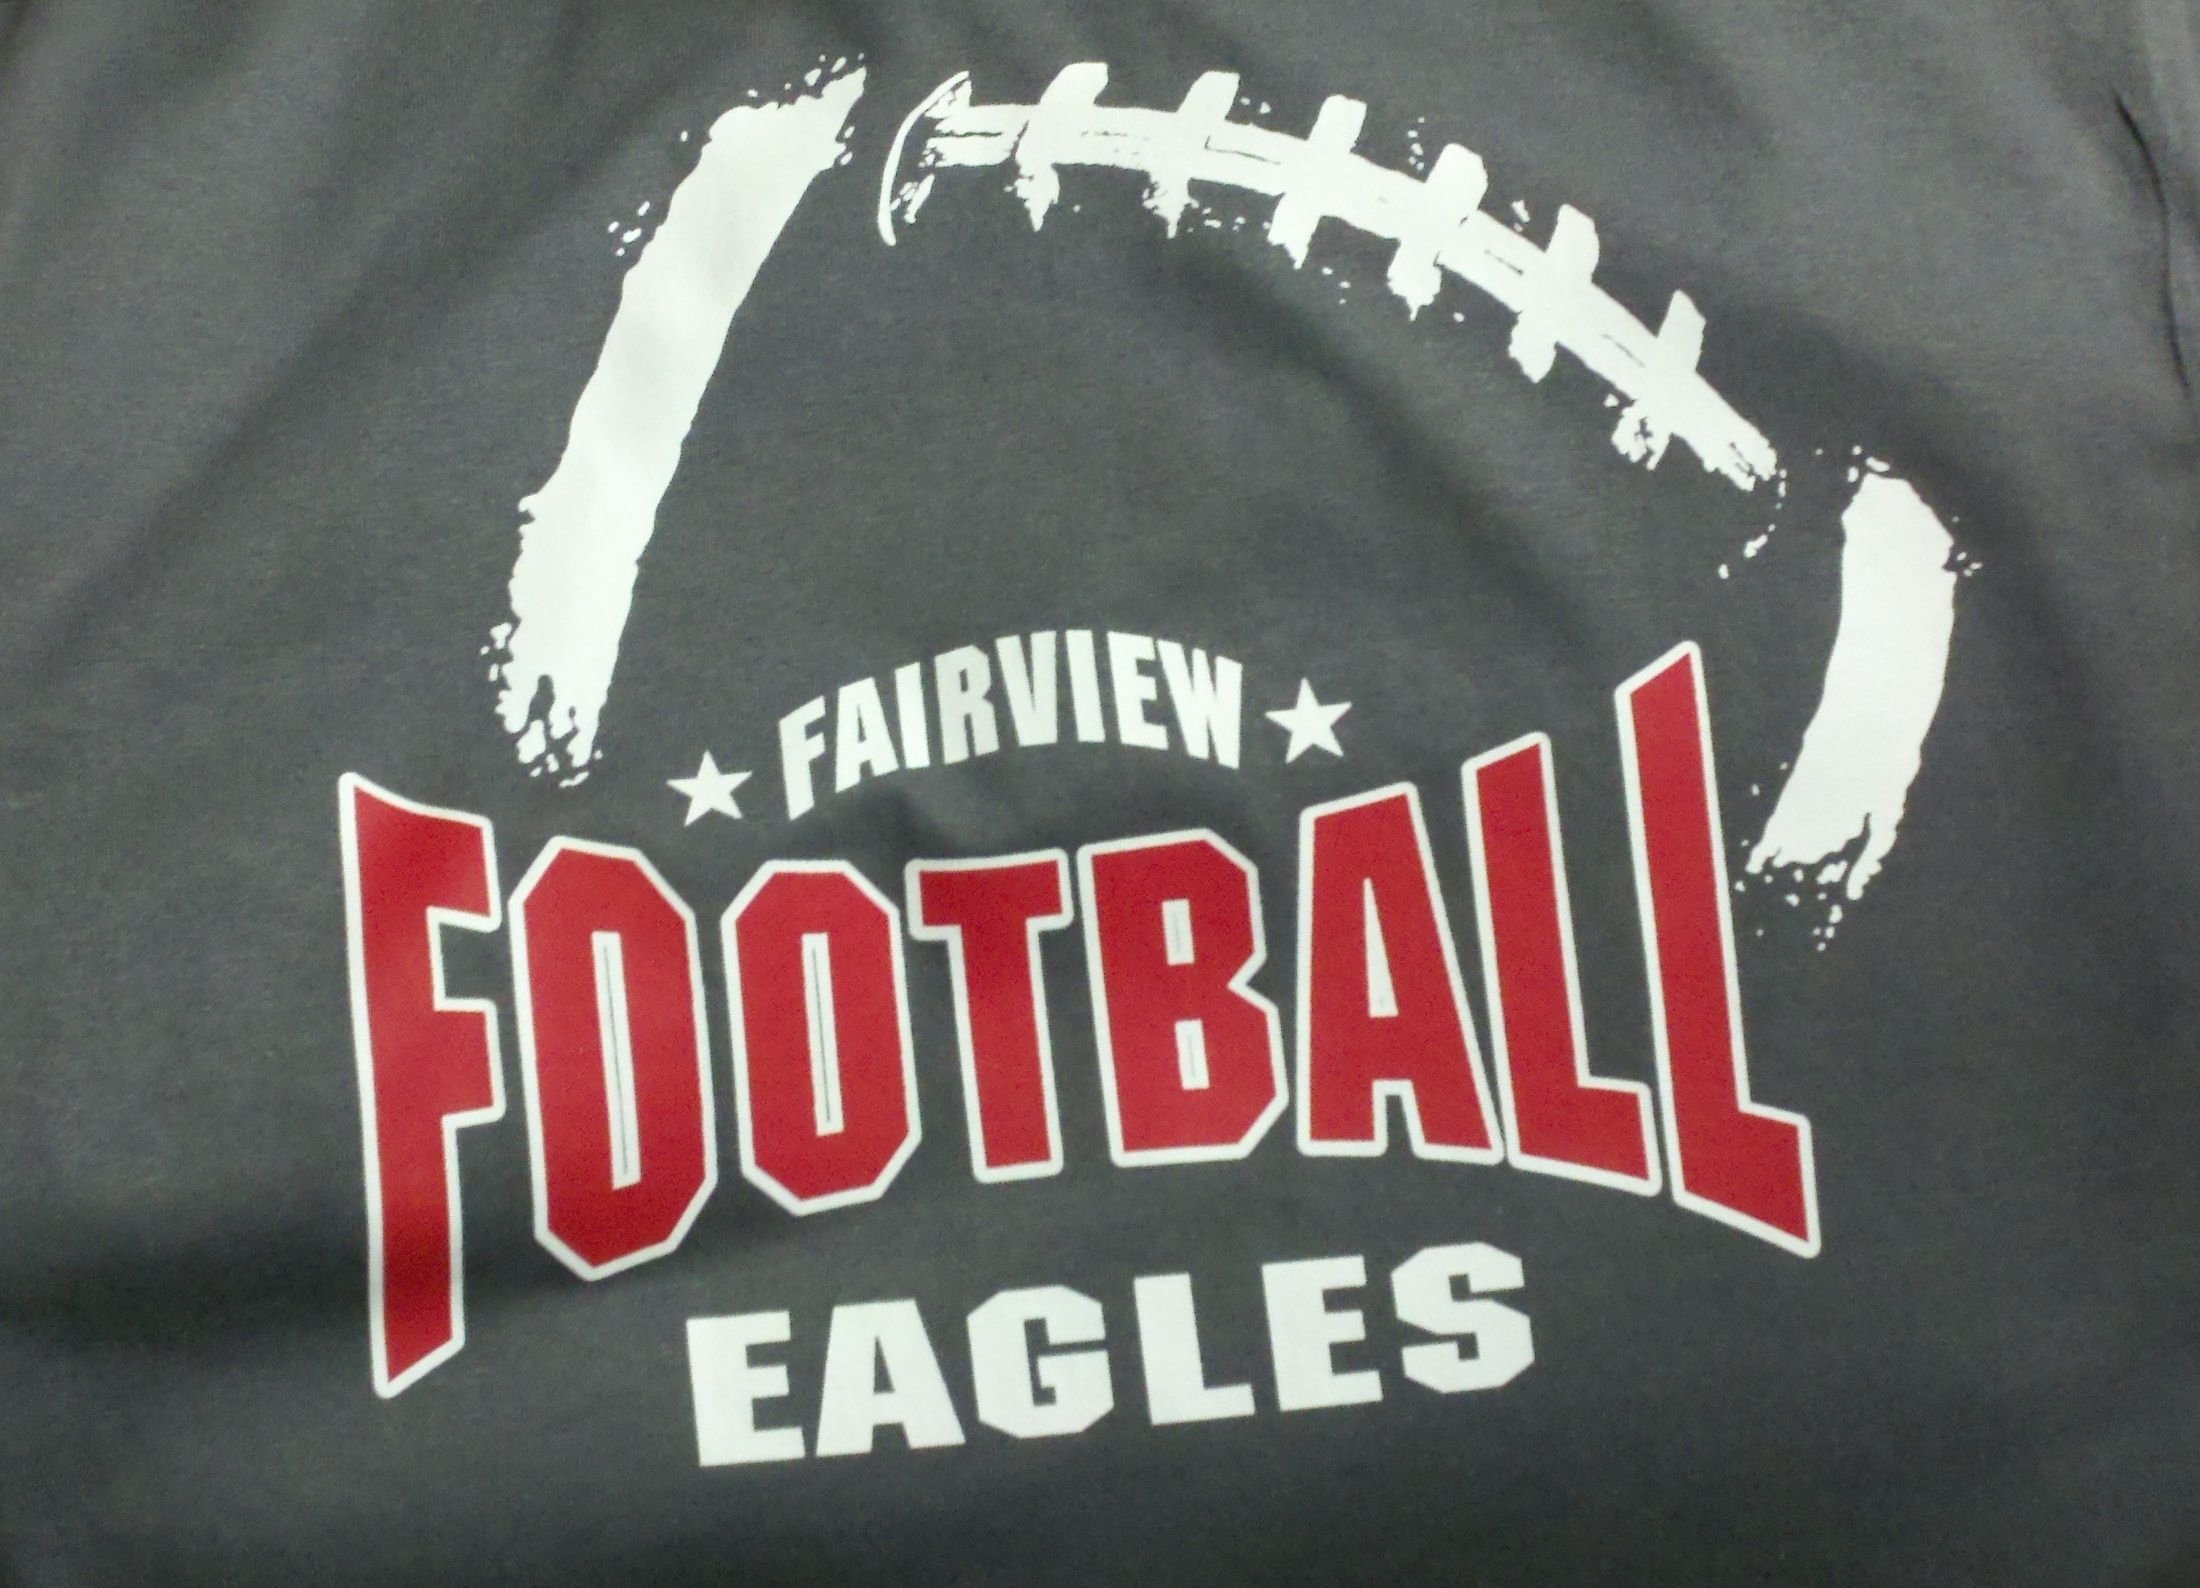 High School Football Shirt Ideas Fairview Apparel Available Check 2 